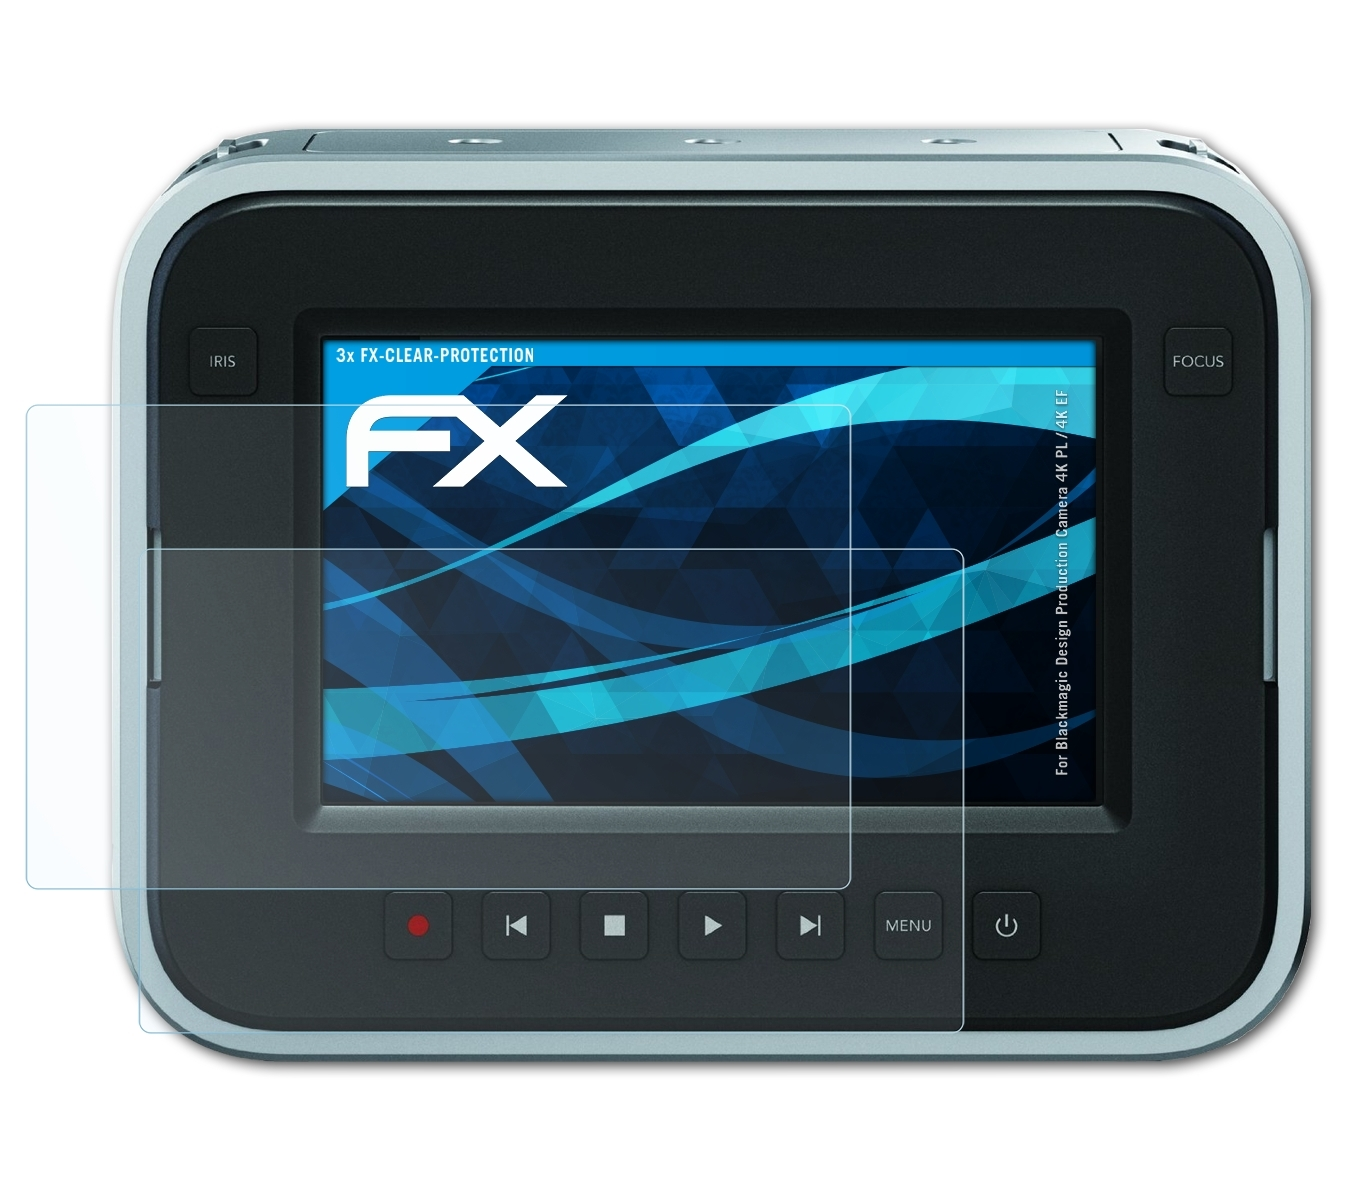 Camera (4K PL 4K Design ATFOLIX Blackmagic Displayschutz(für EF)) FX-Clear Production 3x /